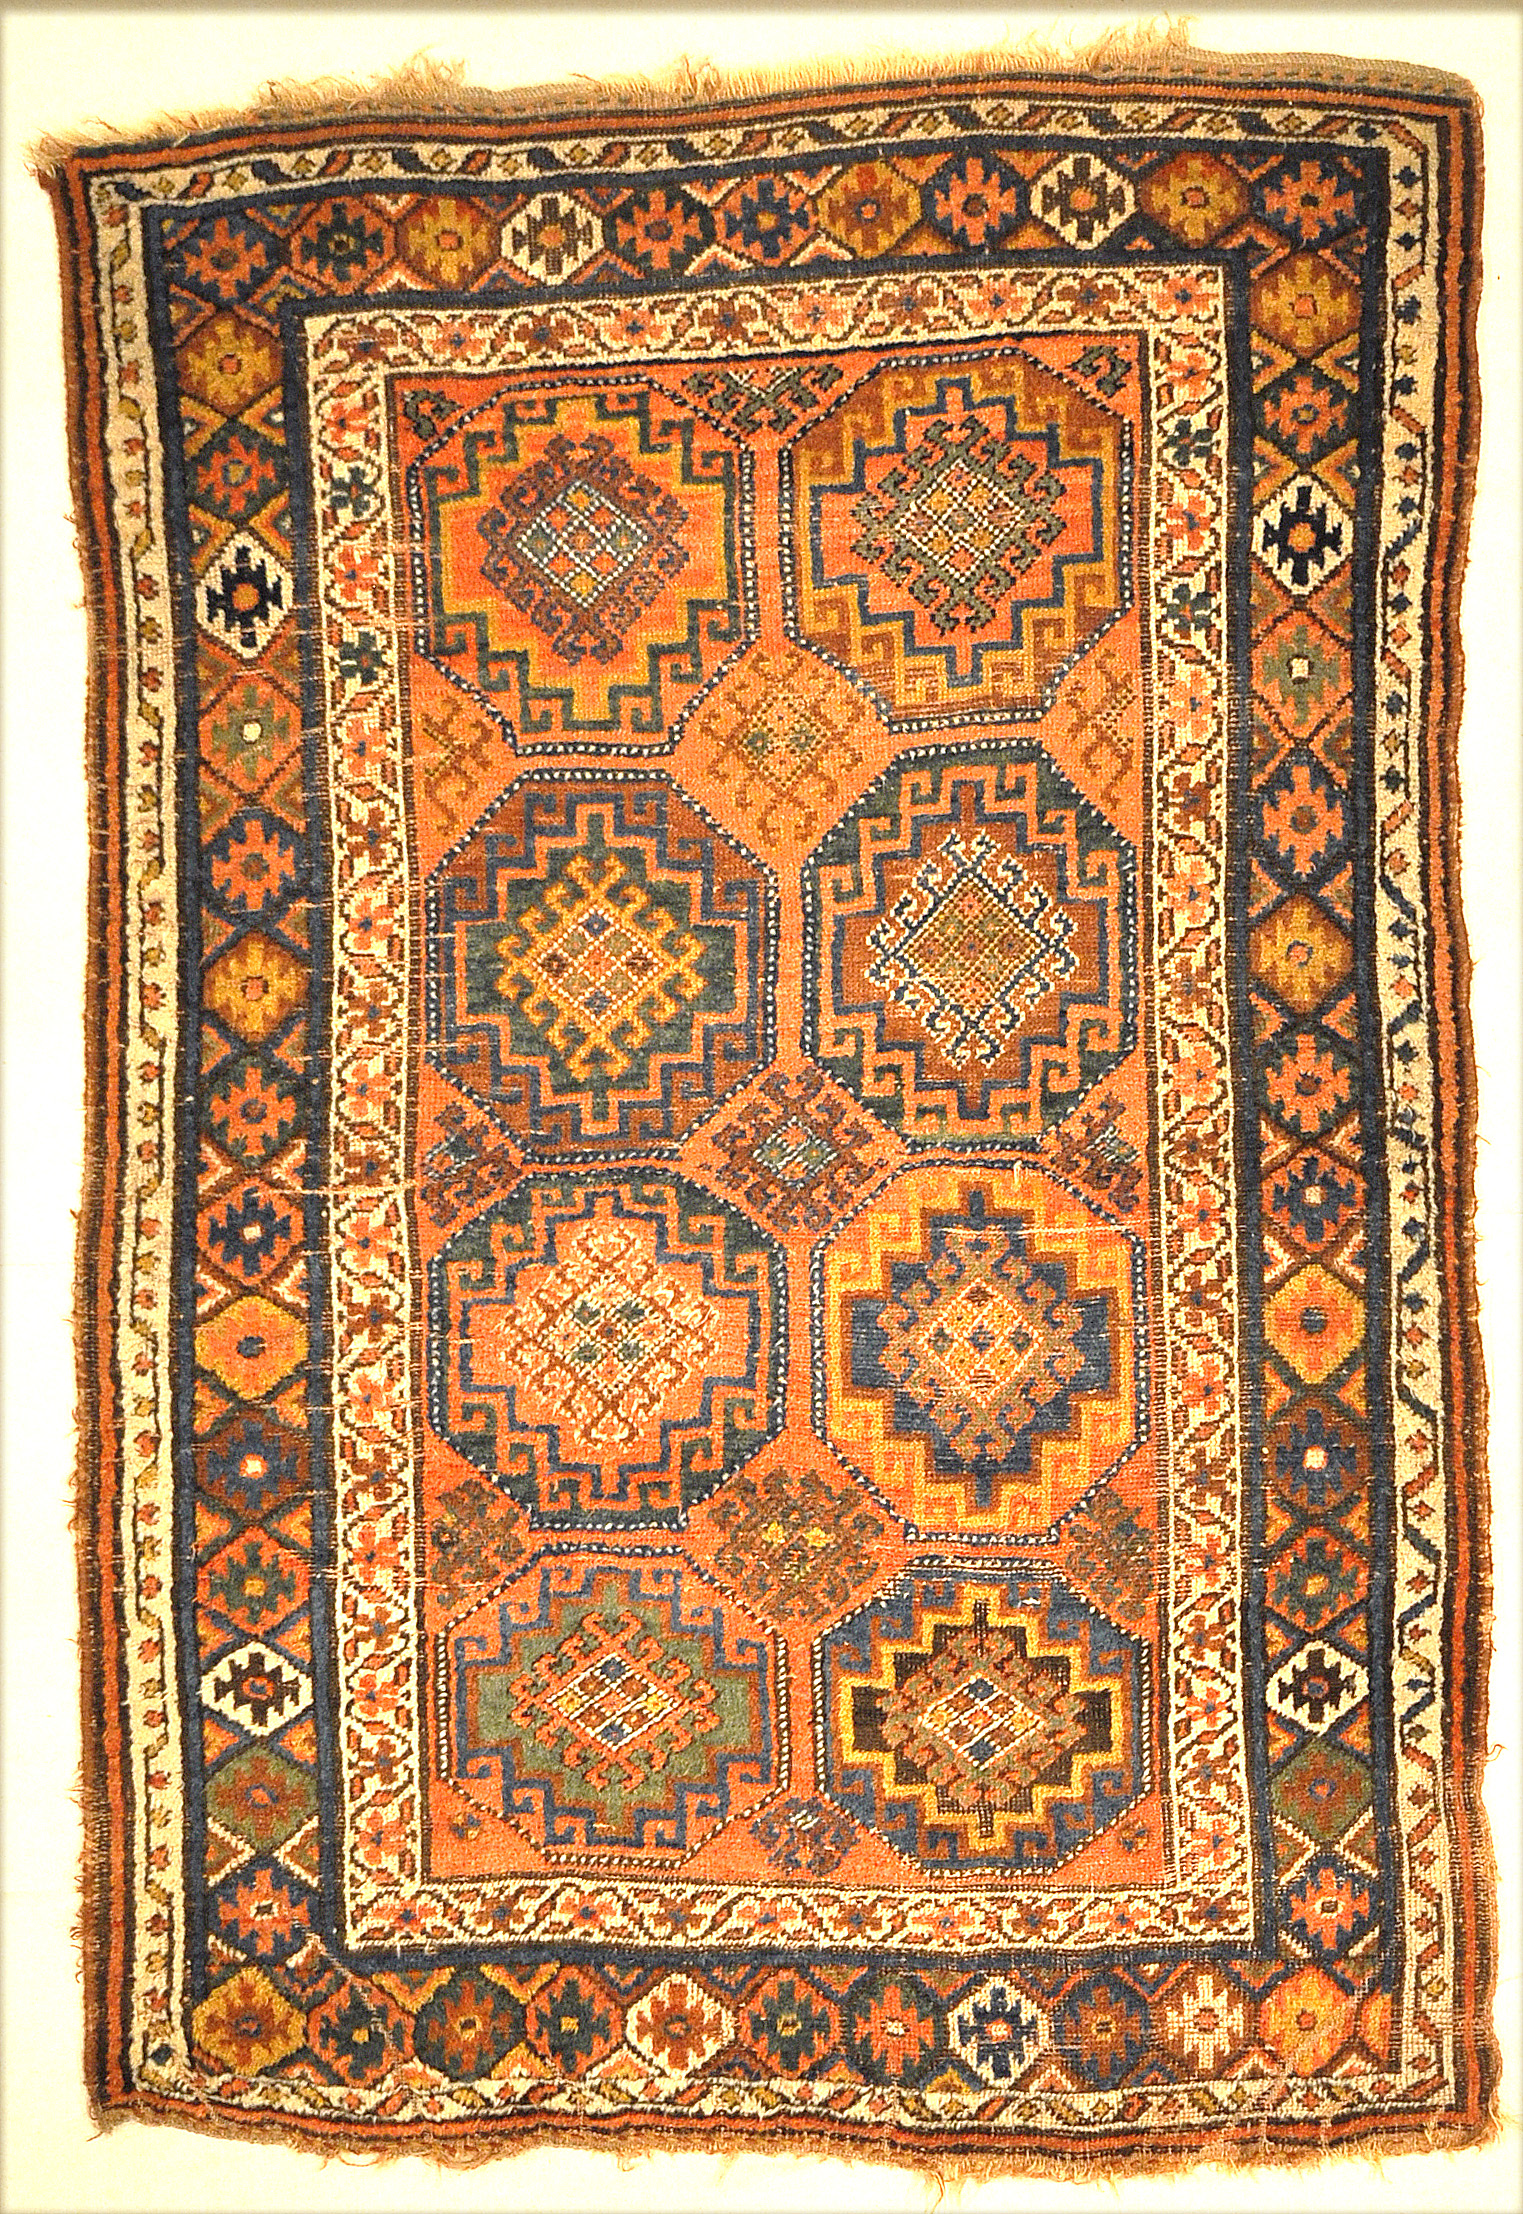 Antique South West Persian Kurdish Rug Intricate Design Genuine Authentic Woven Carpet Art Santa Barbara Design Center Rugs and More